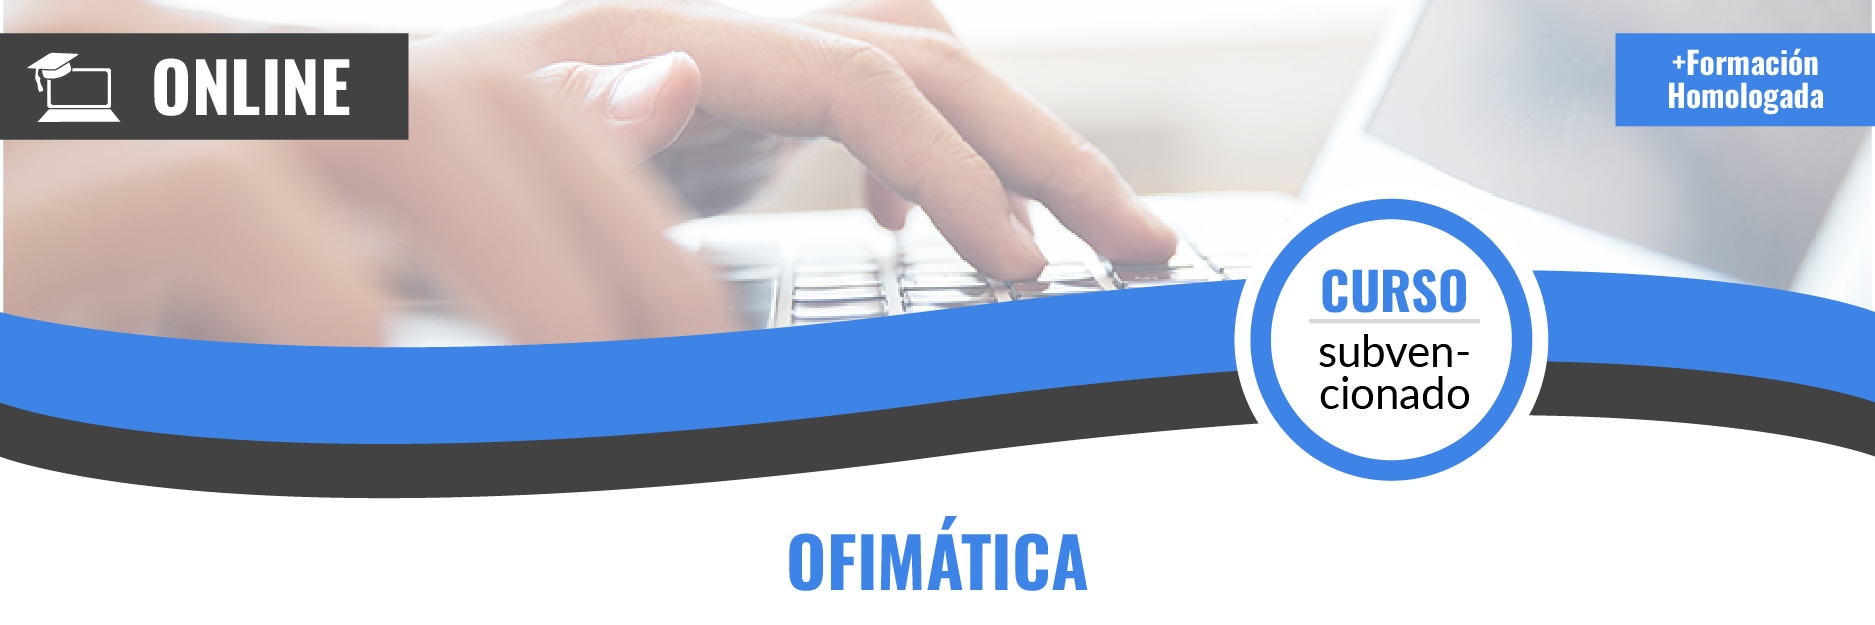 mf0233_2-ofimatica-curso-online.jpg